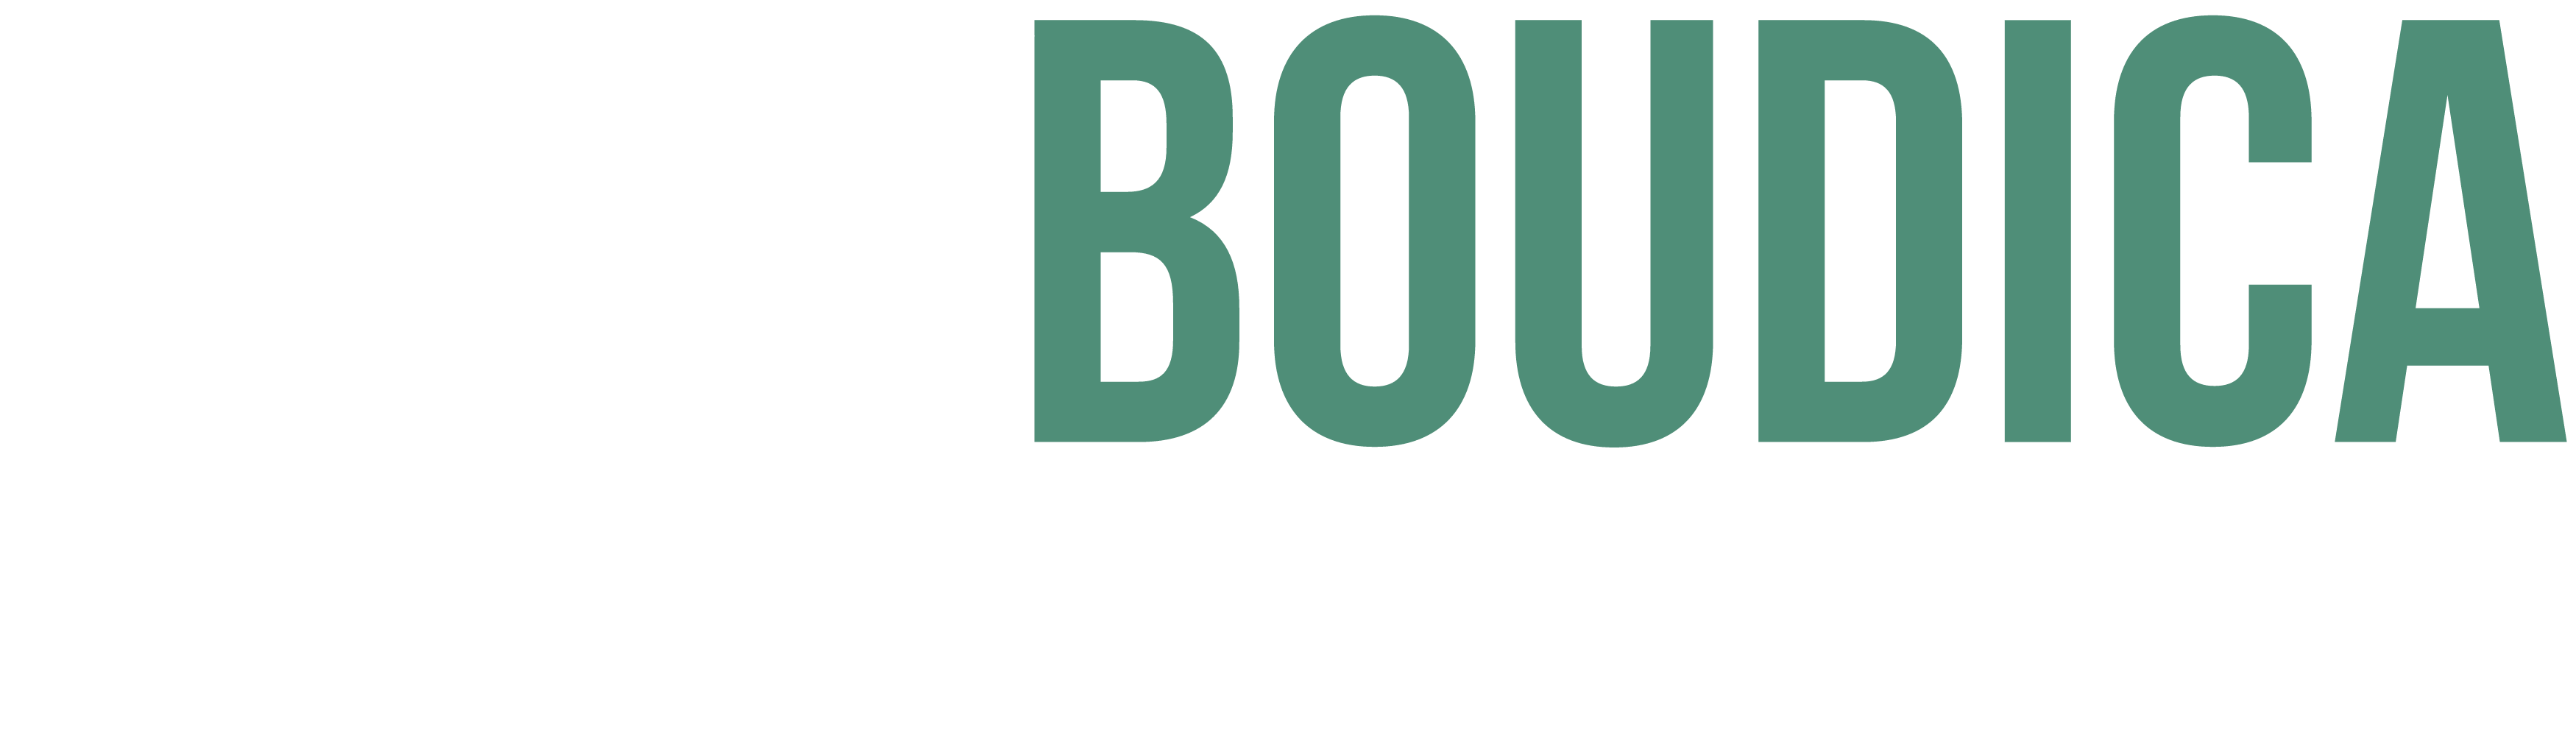 Boudica Cybersecurity Logo